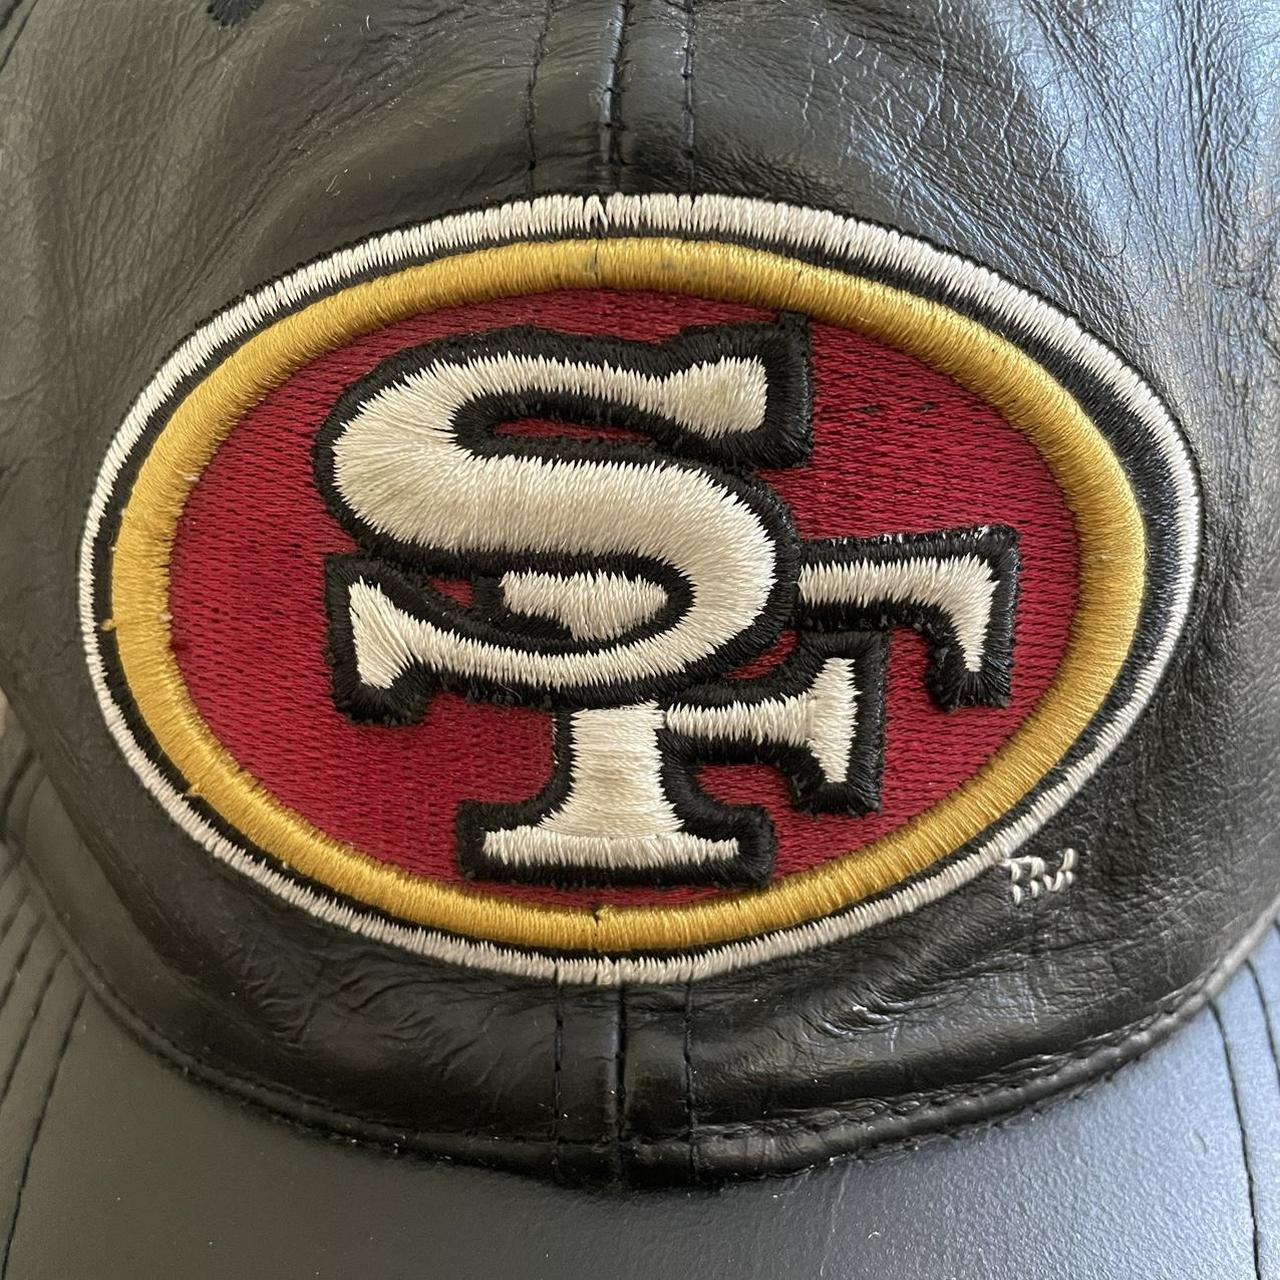 Nfl 100 year San Francisco 49ers draft hat snap back - Depop